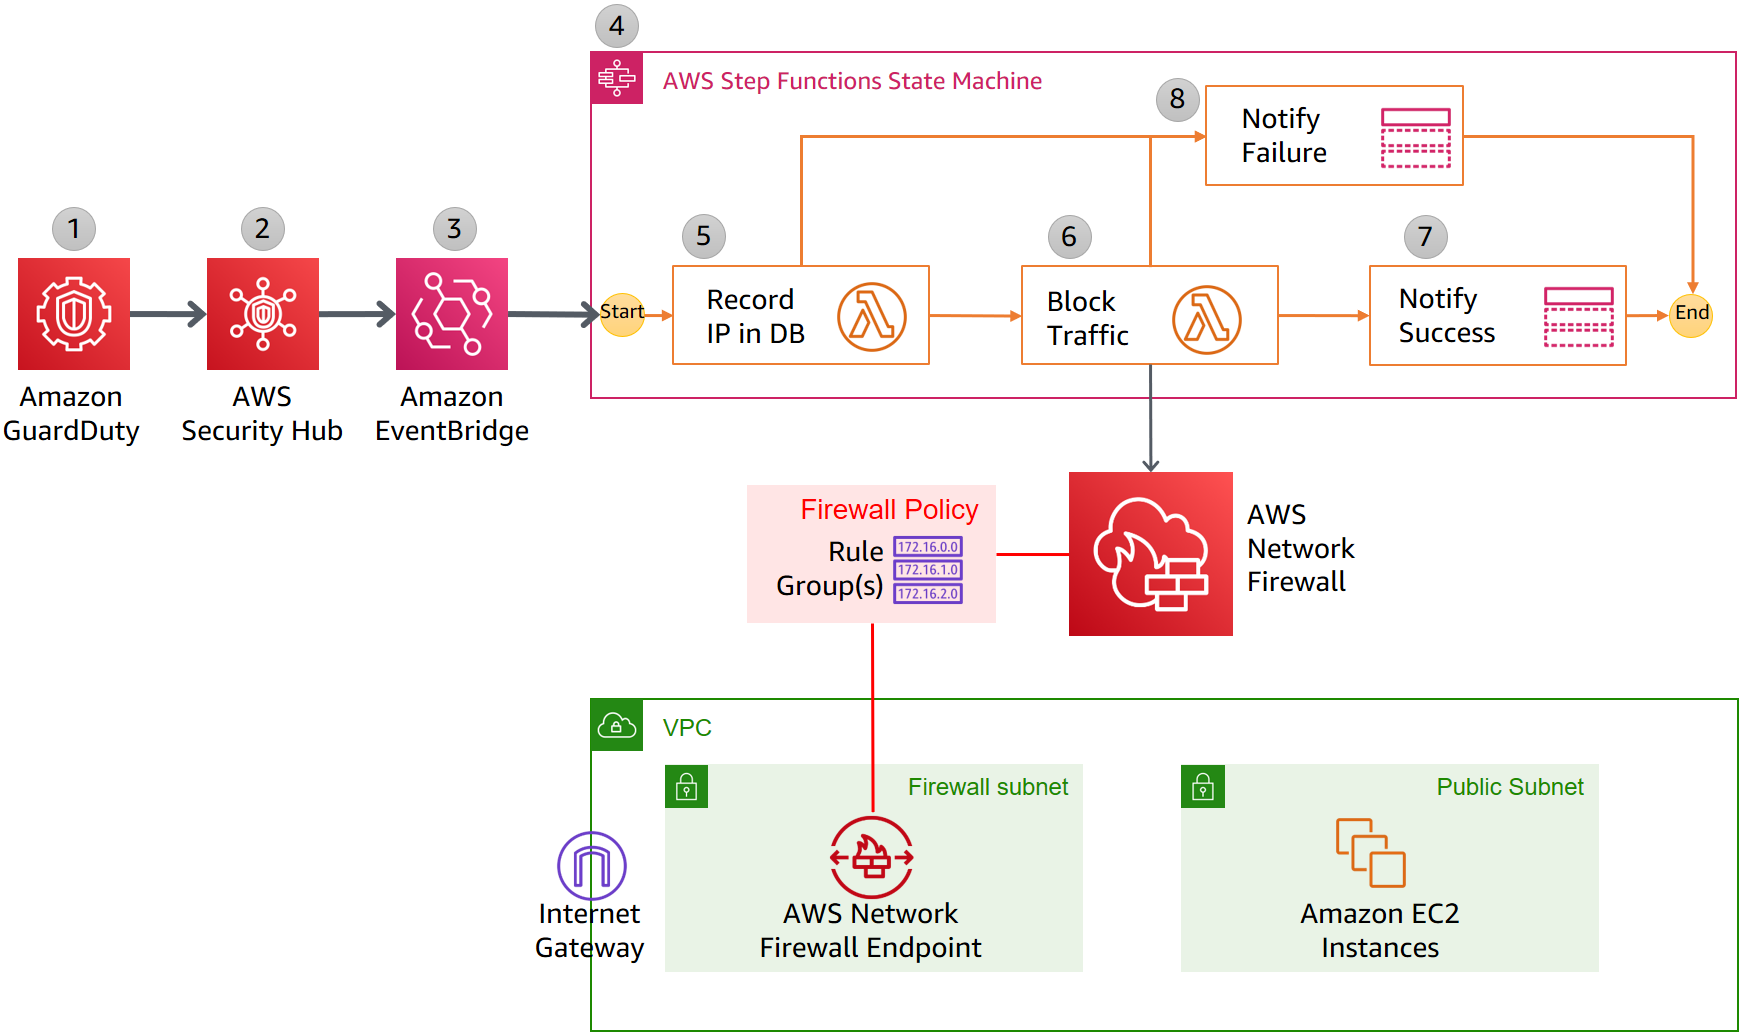 AWS security automation workflow with Amazon GaurdDuty, AWS Security Hub, and Amazon EventBridge.